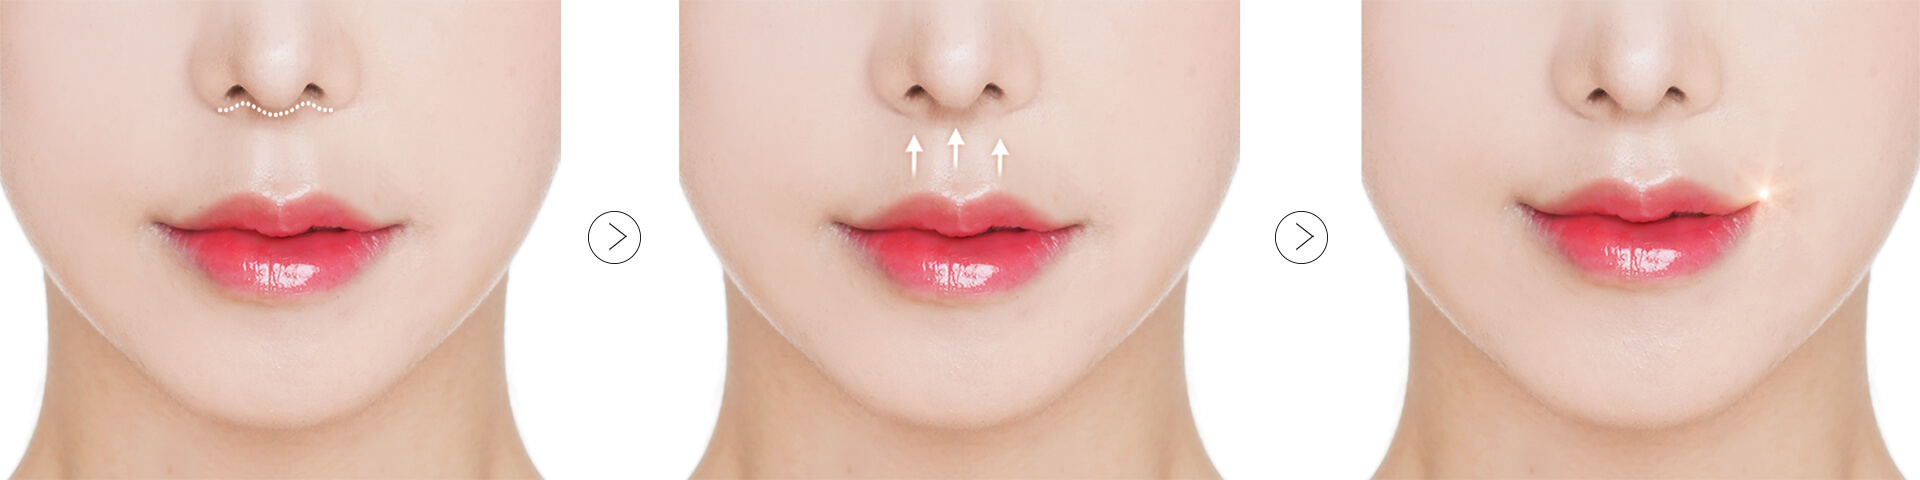 Bullhorn lip lift surgery procedure | Hyundai Aesthetics Plastic Surgery